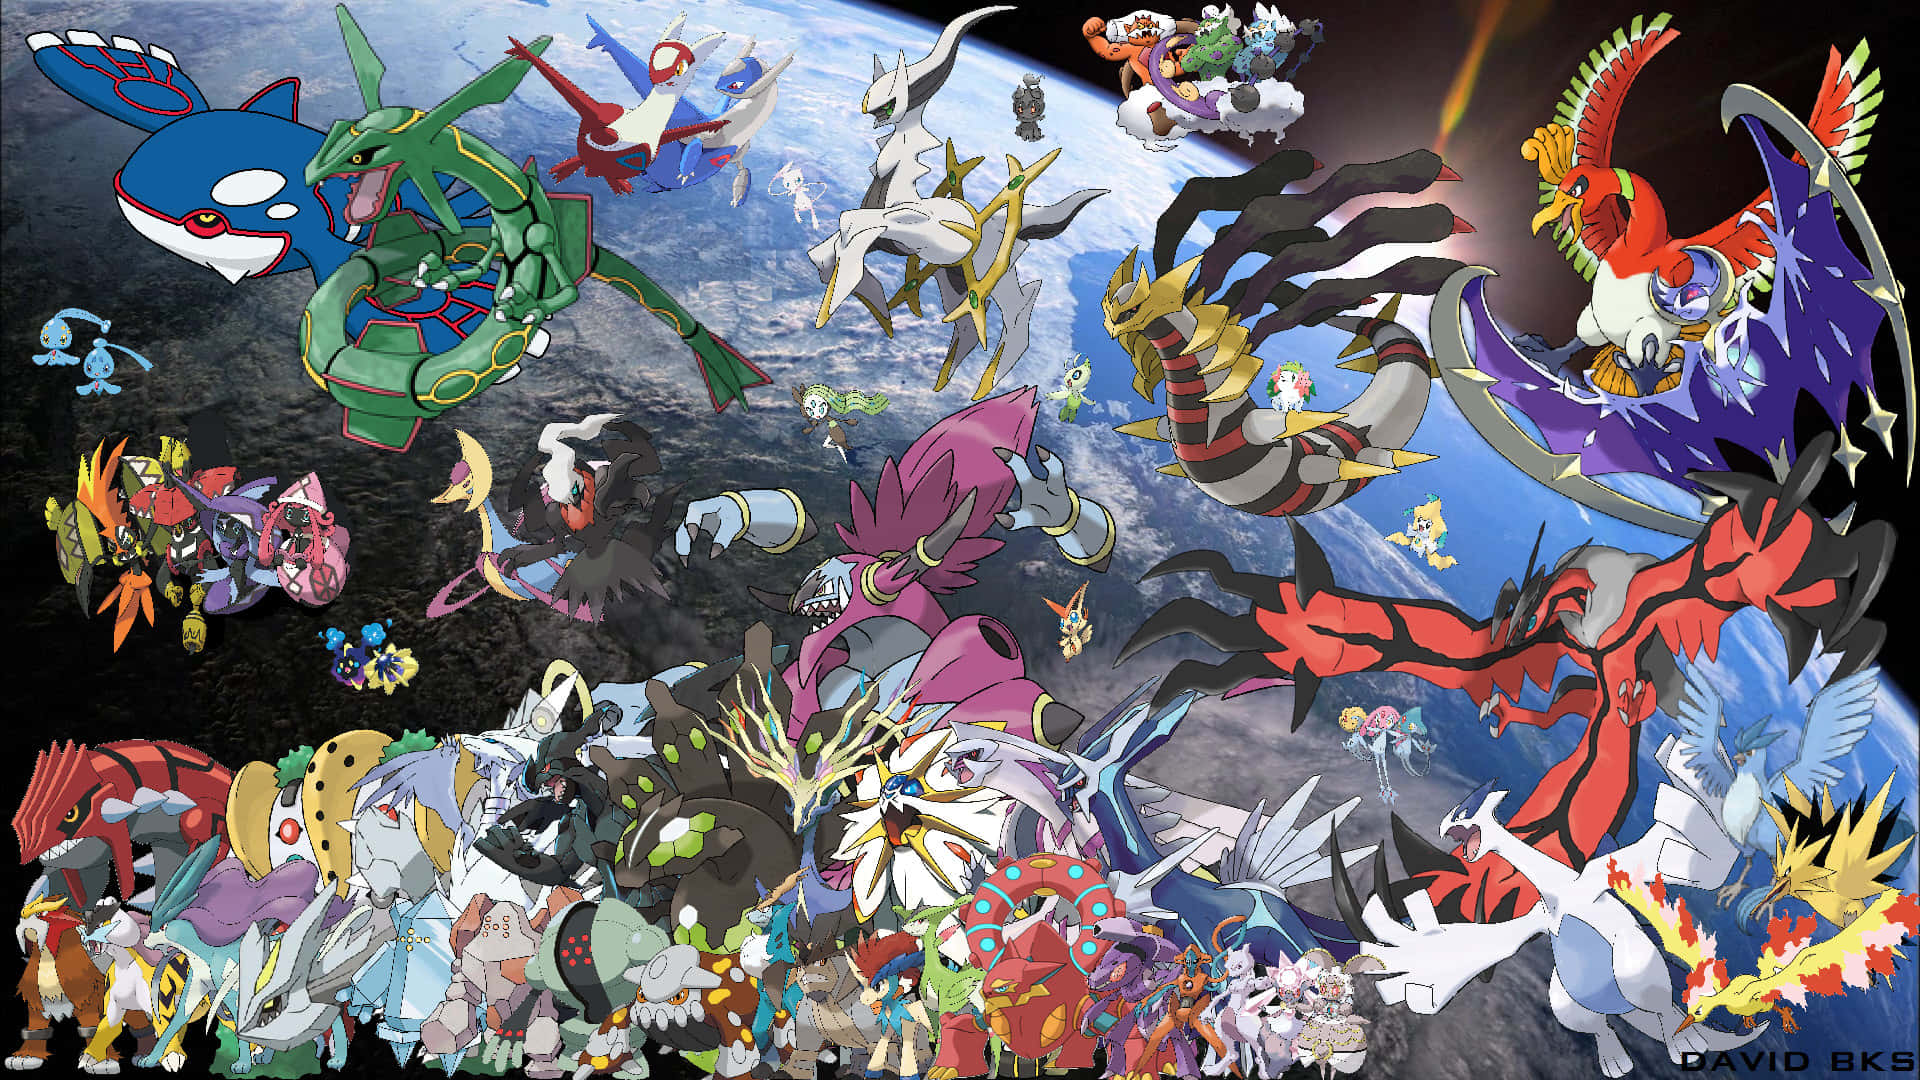 Legendariskapokemon Mega Evolution-bild.